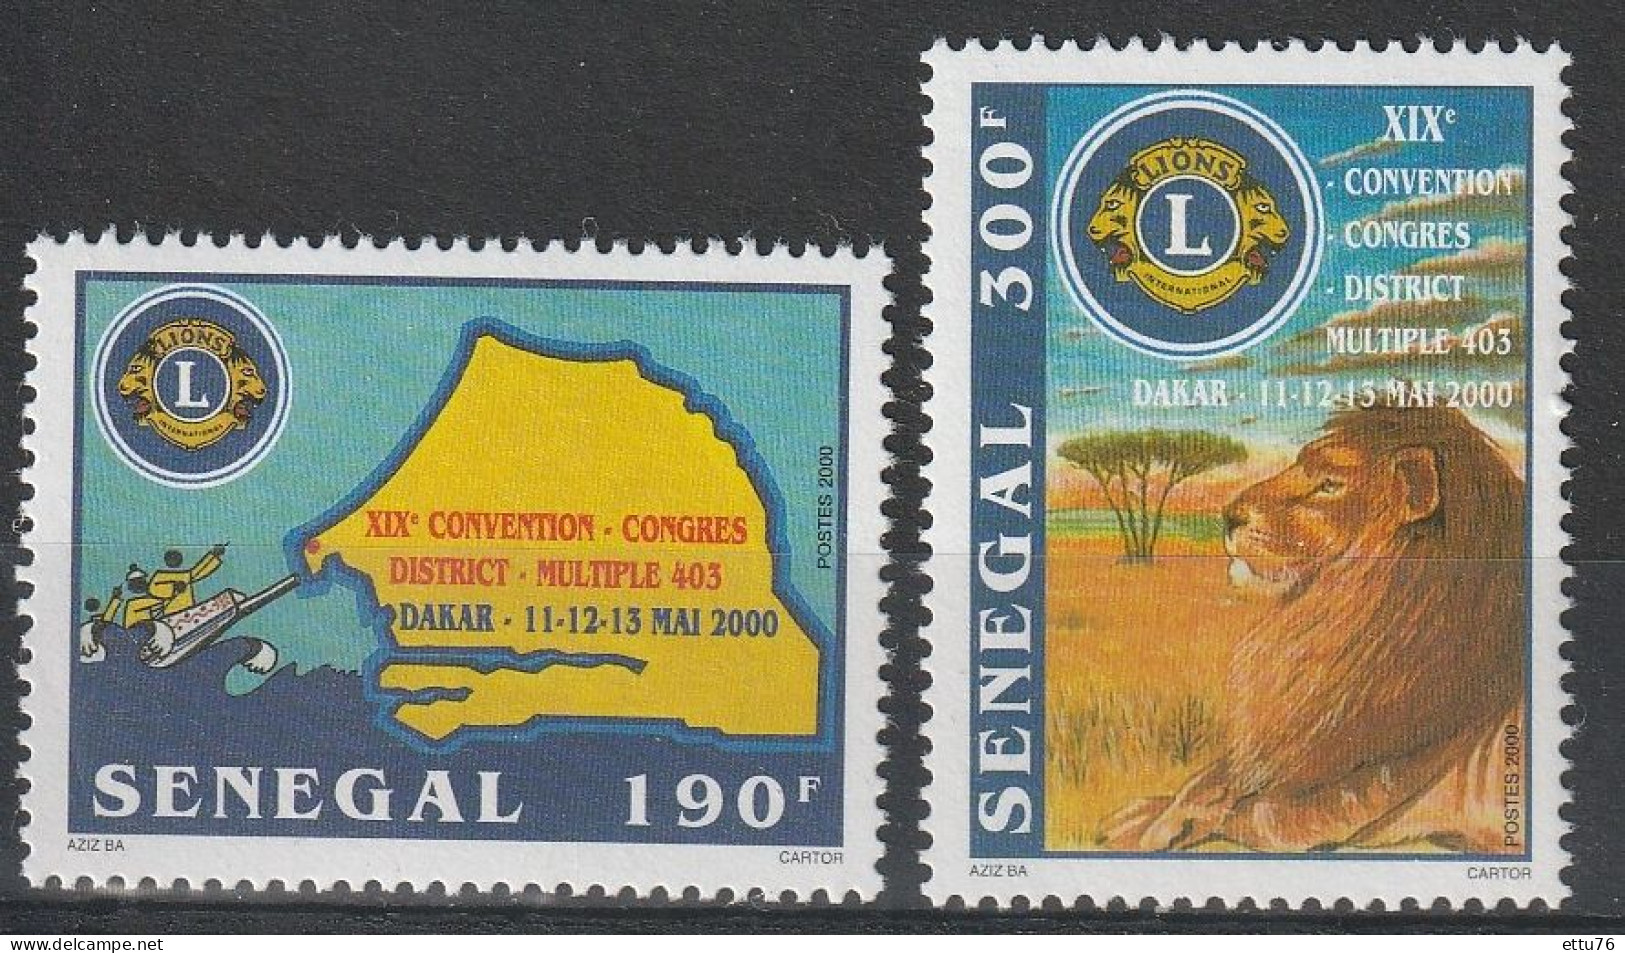 Senegal  2001  Lions  District  |Congress Set  MNH - Senegal (1960-...)